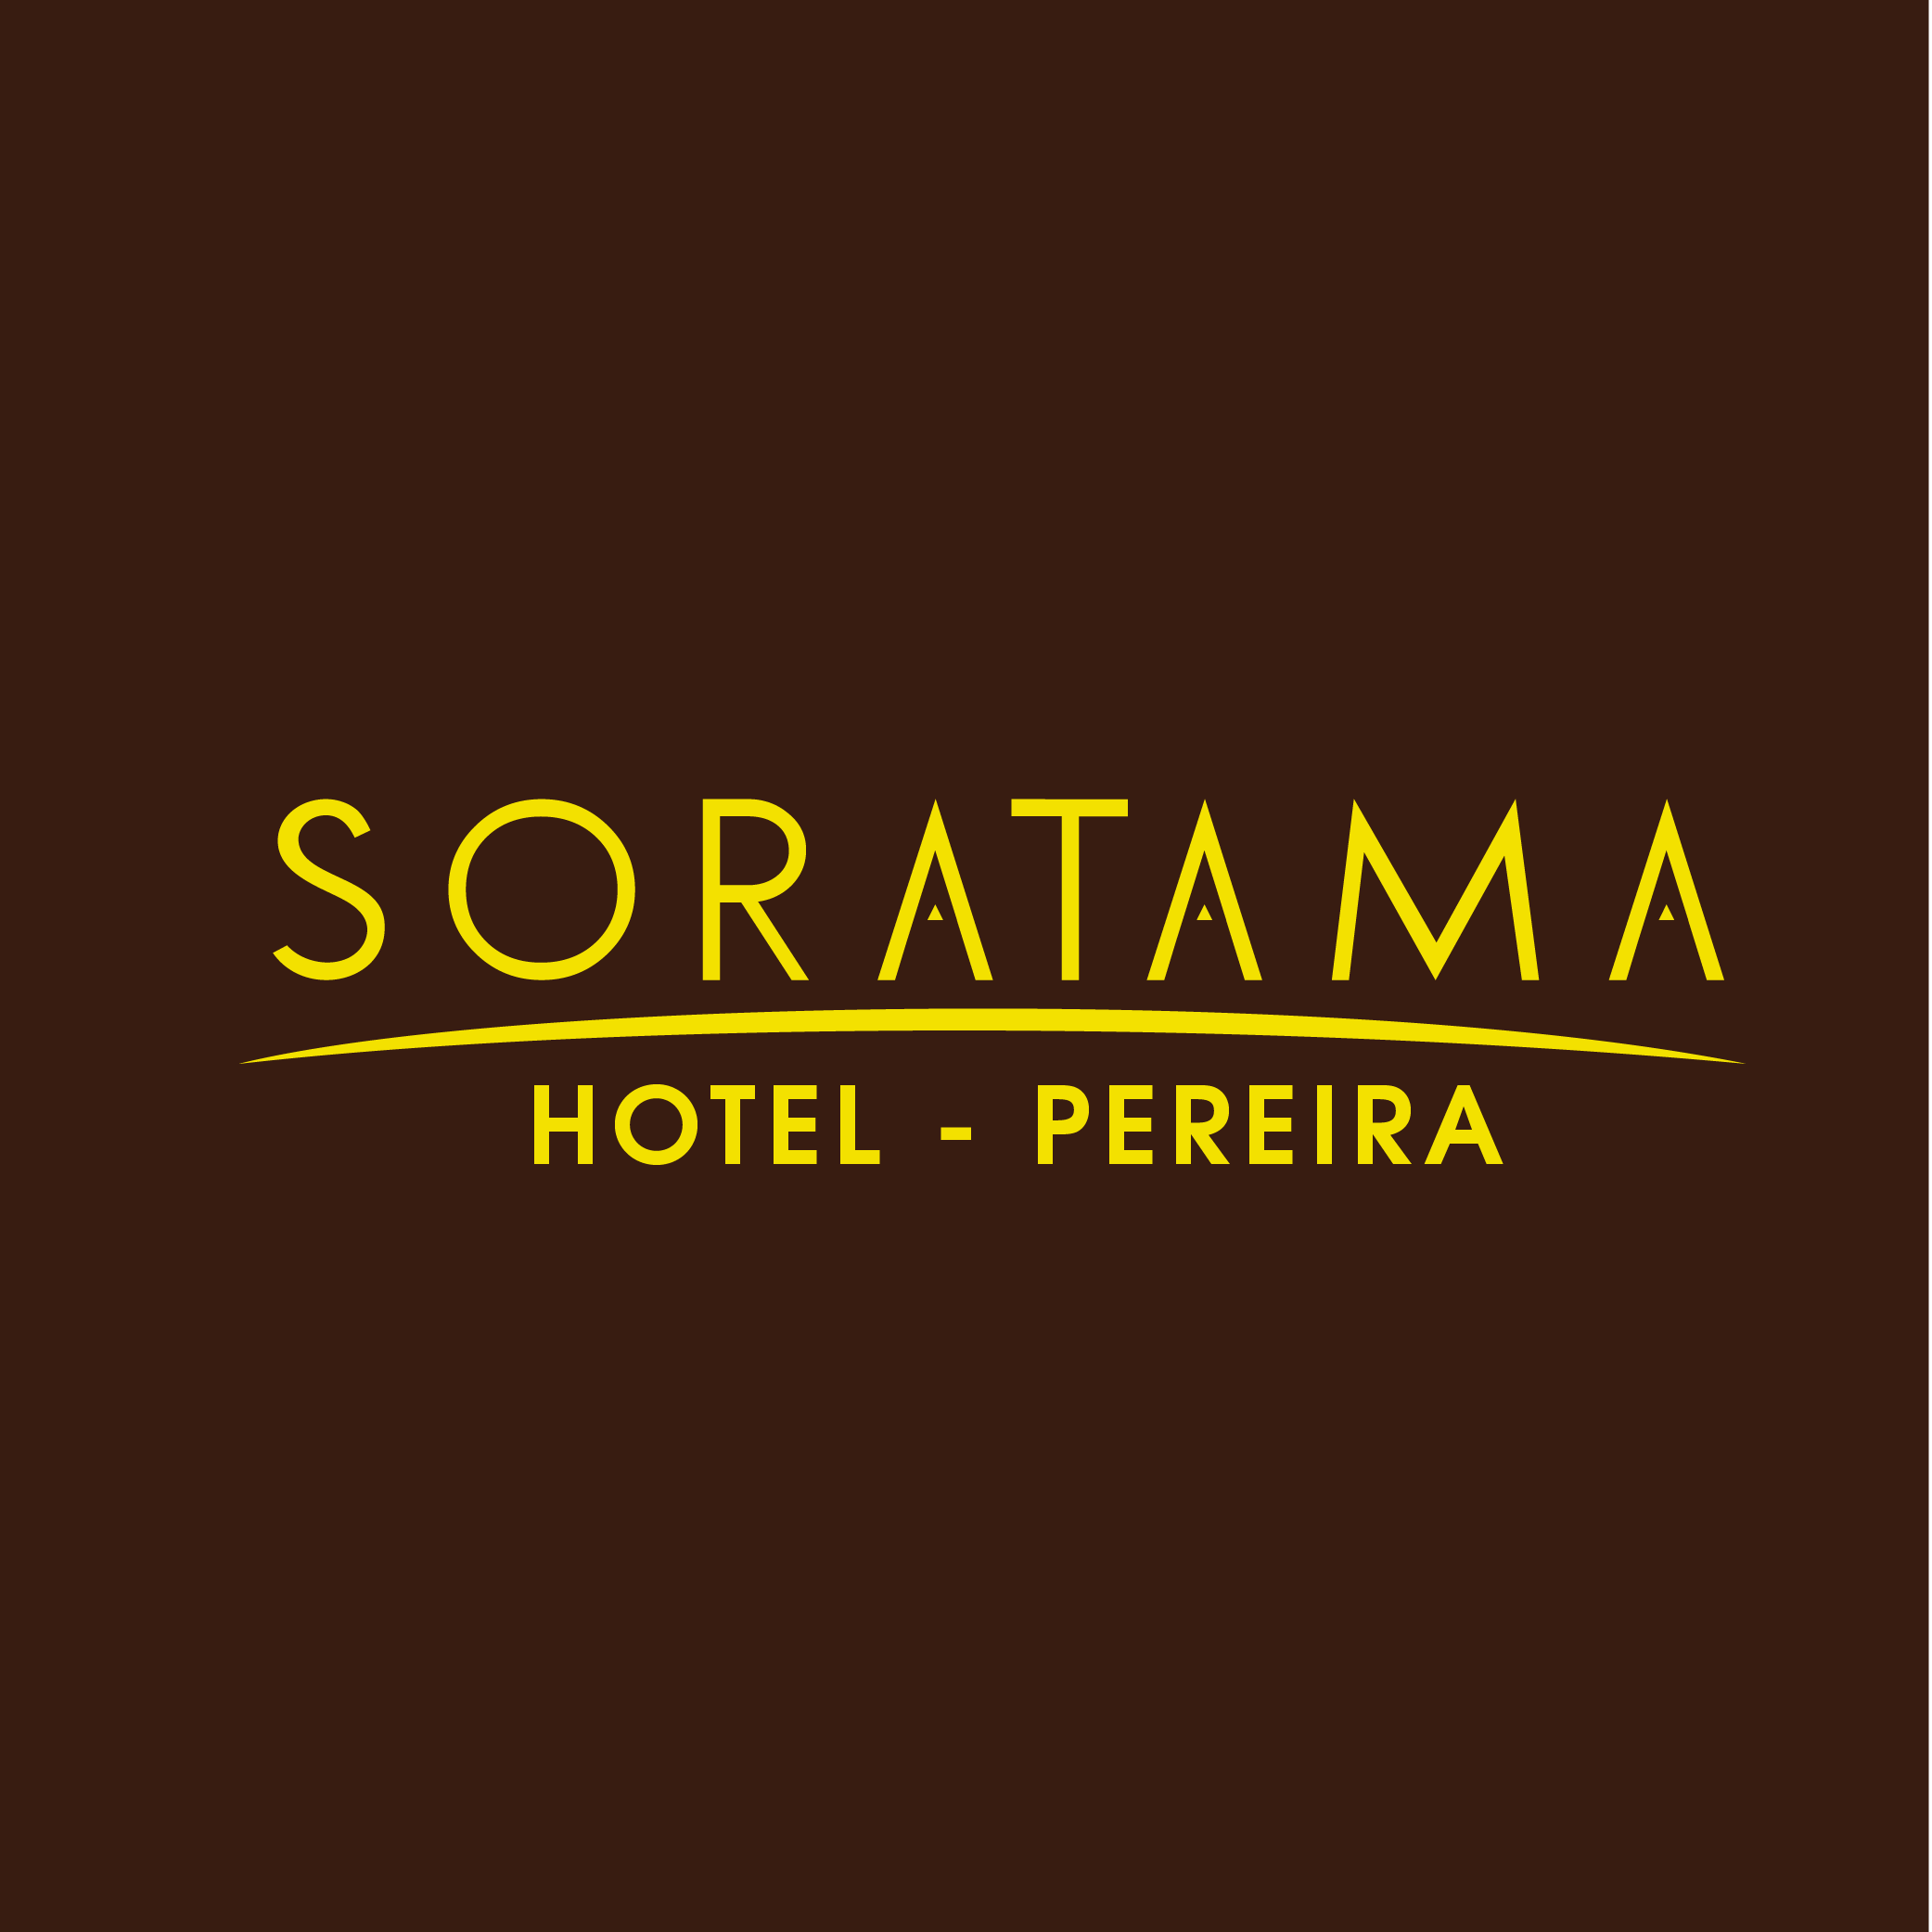 HOTEL SORATAMA